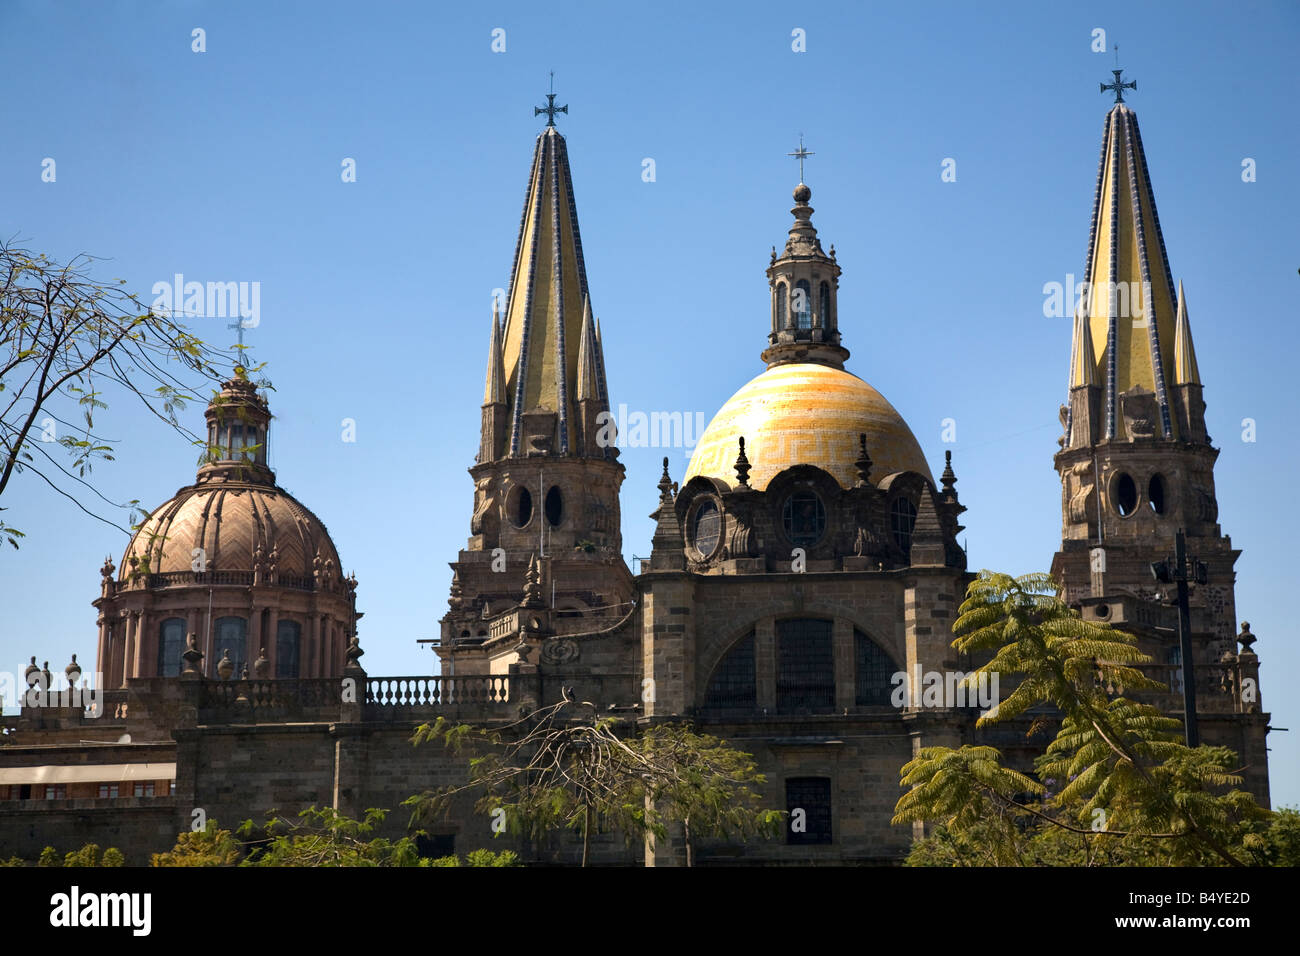 Metropolitan Cathedral Temple de Santa Maria de Gracias Guadalajara Mexico Overview with two domes and two spires Stock Photo